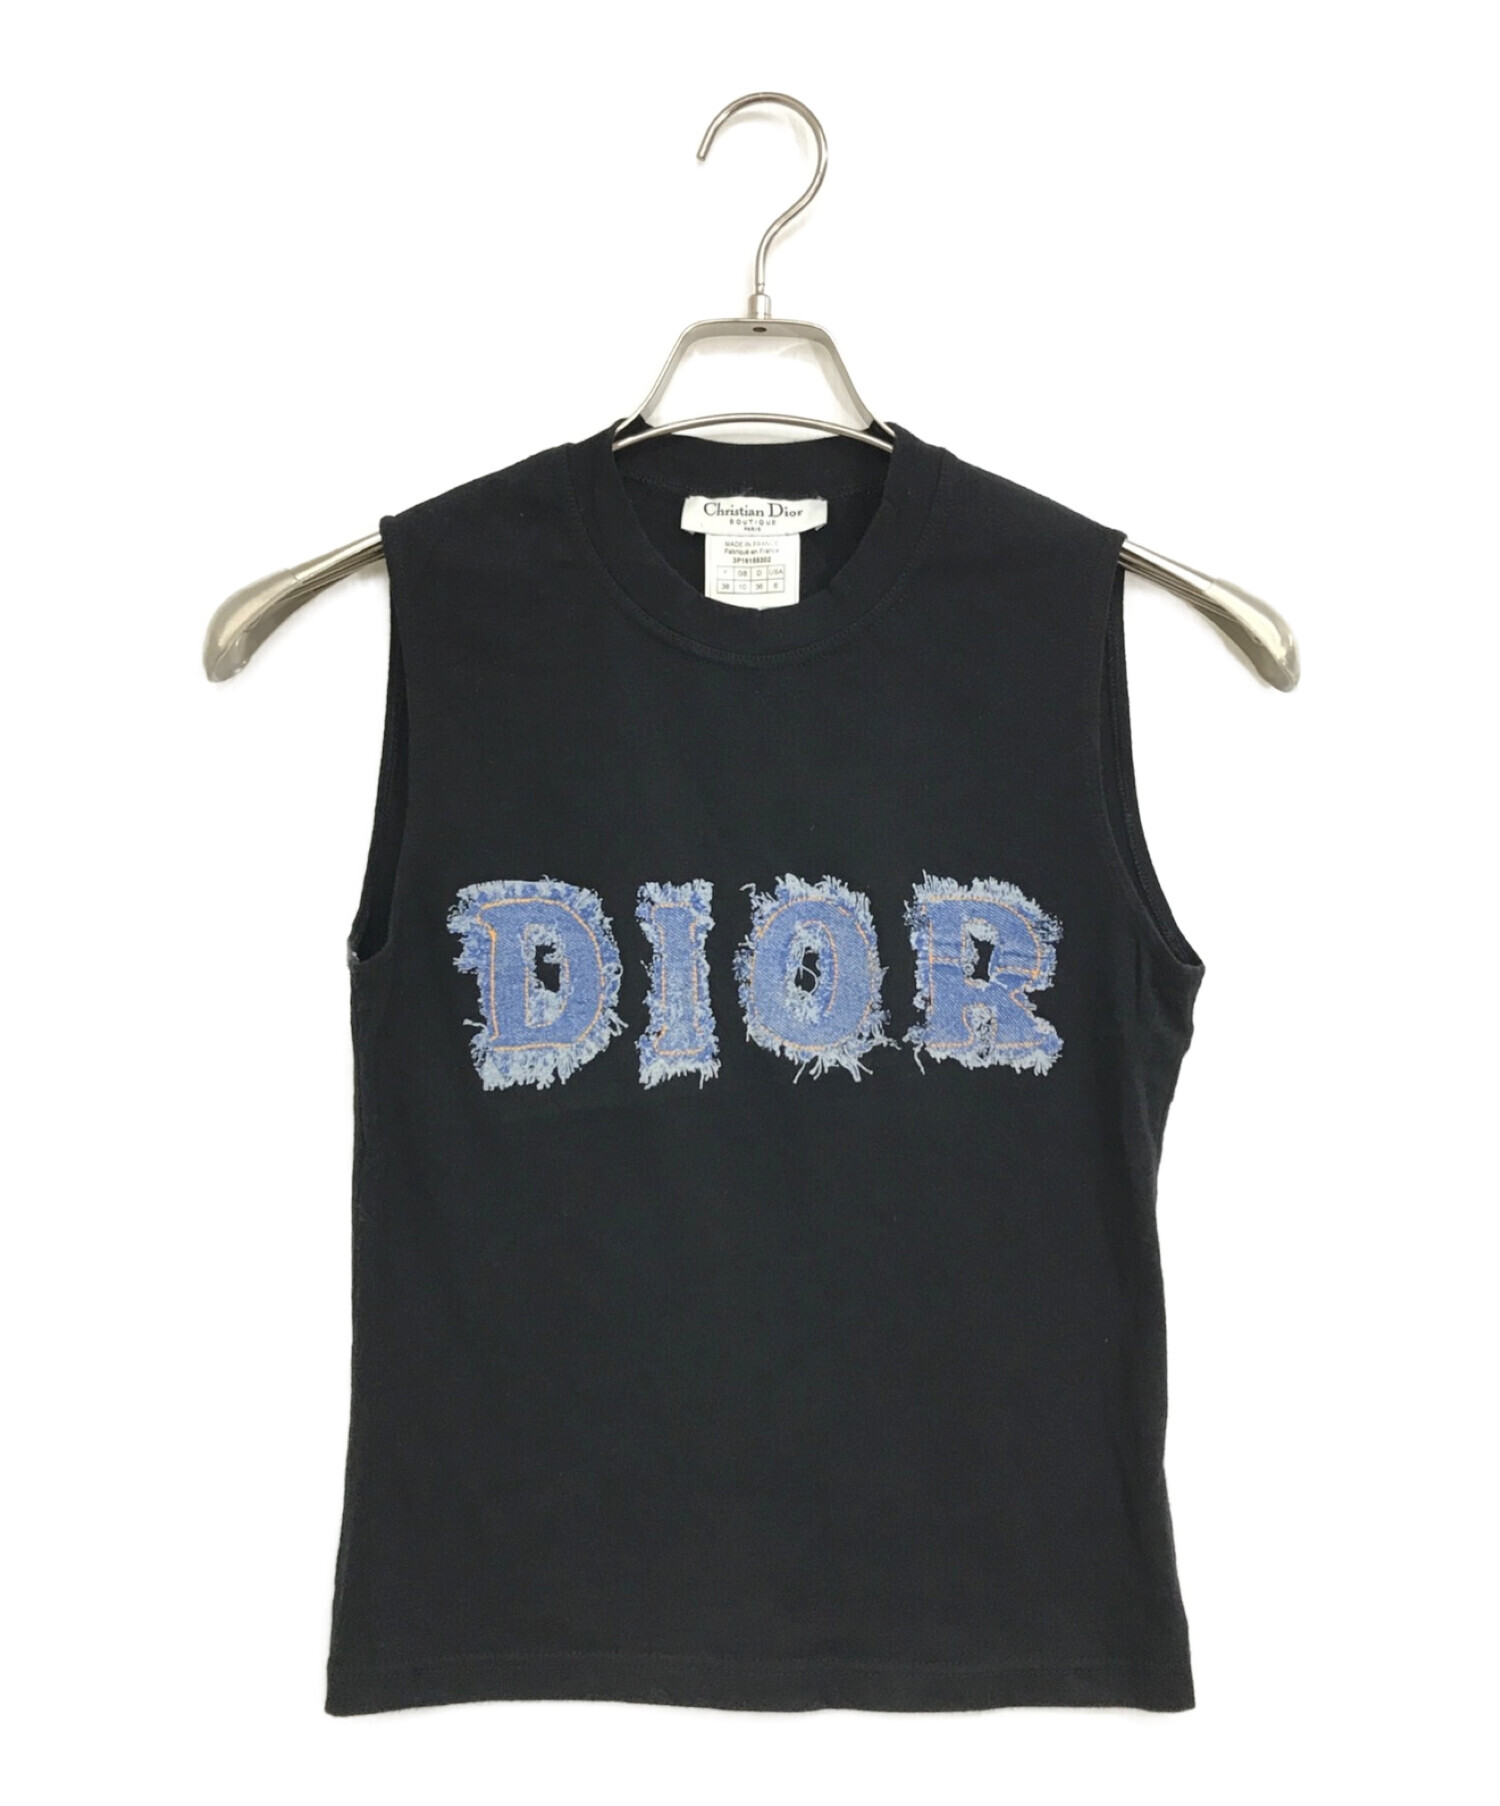 Christian Dior (クリスチャン ディオール) ノースリーブロゴカットソー ブラック サイズ:38